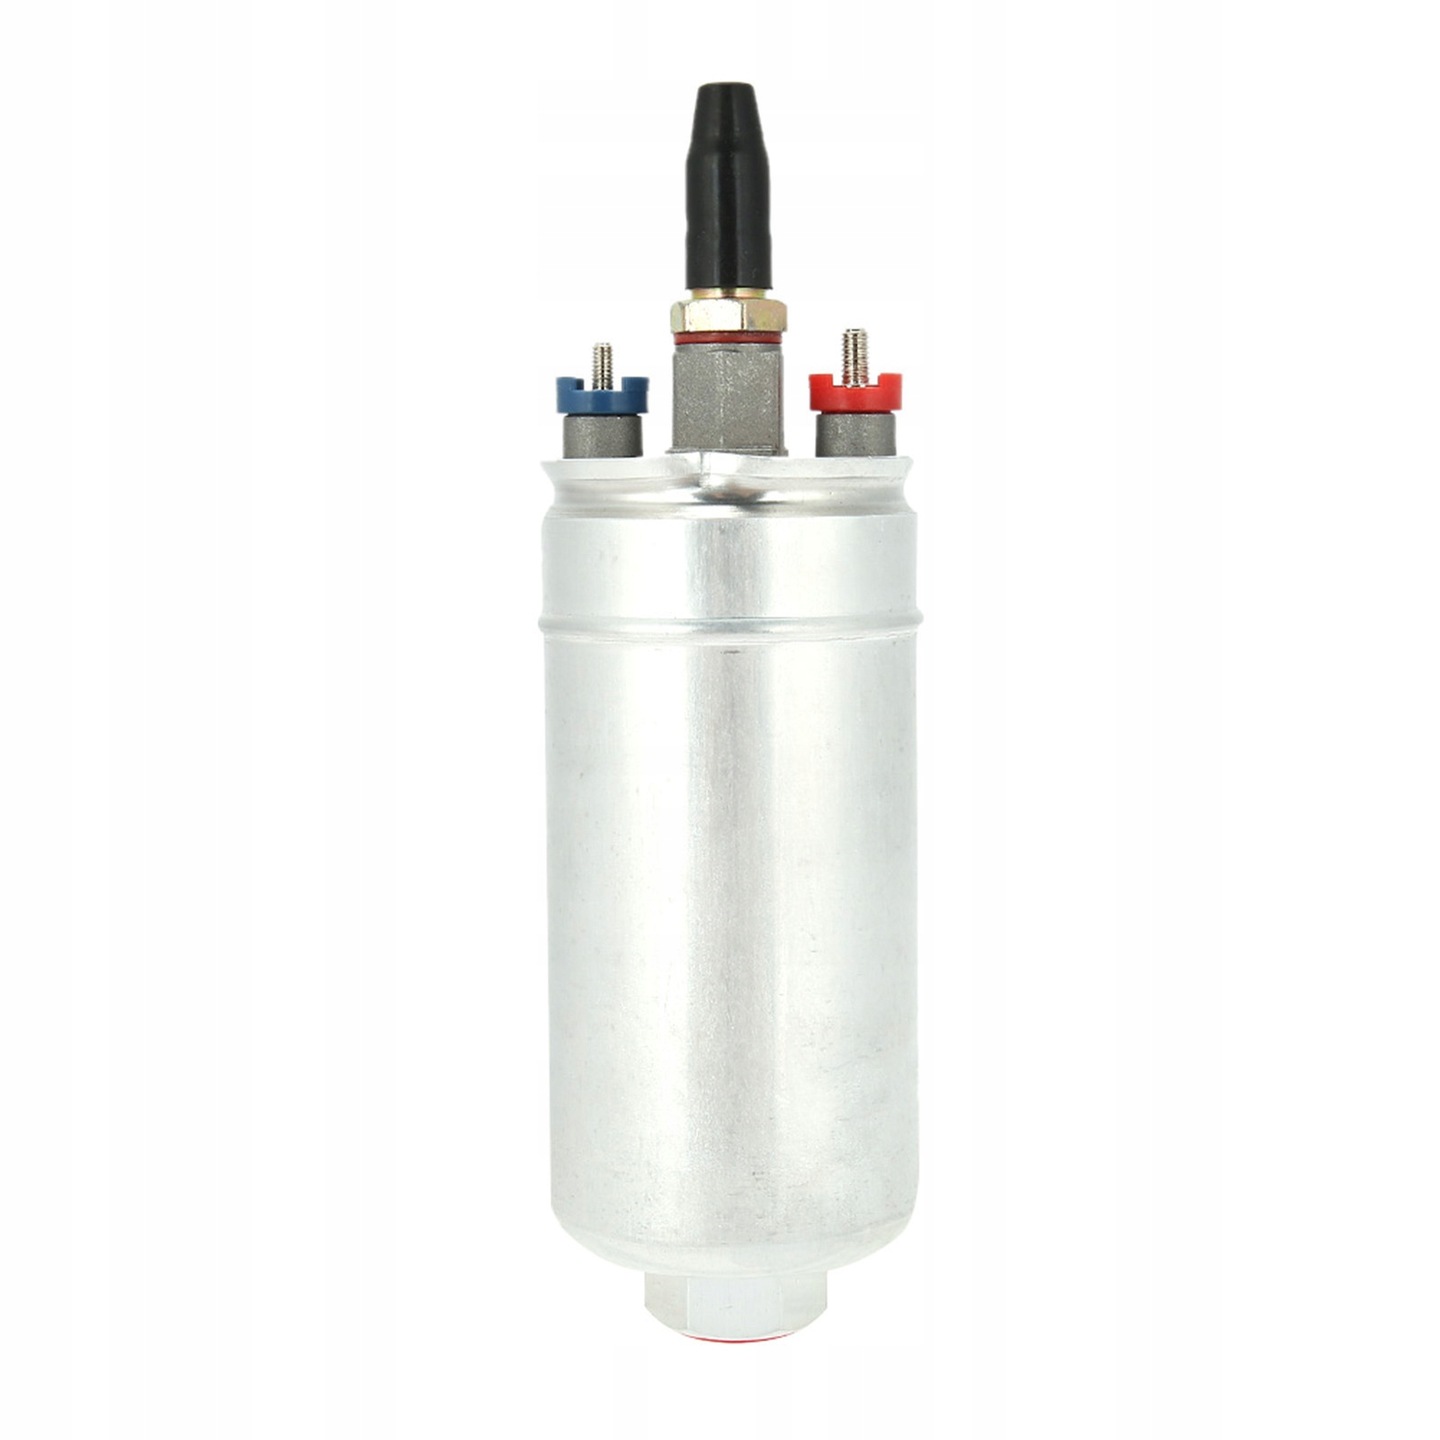 Fuel pump type inline 300lph 0580254044 - Car part Online❱ XDALYS